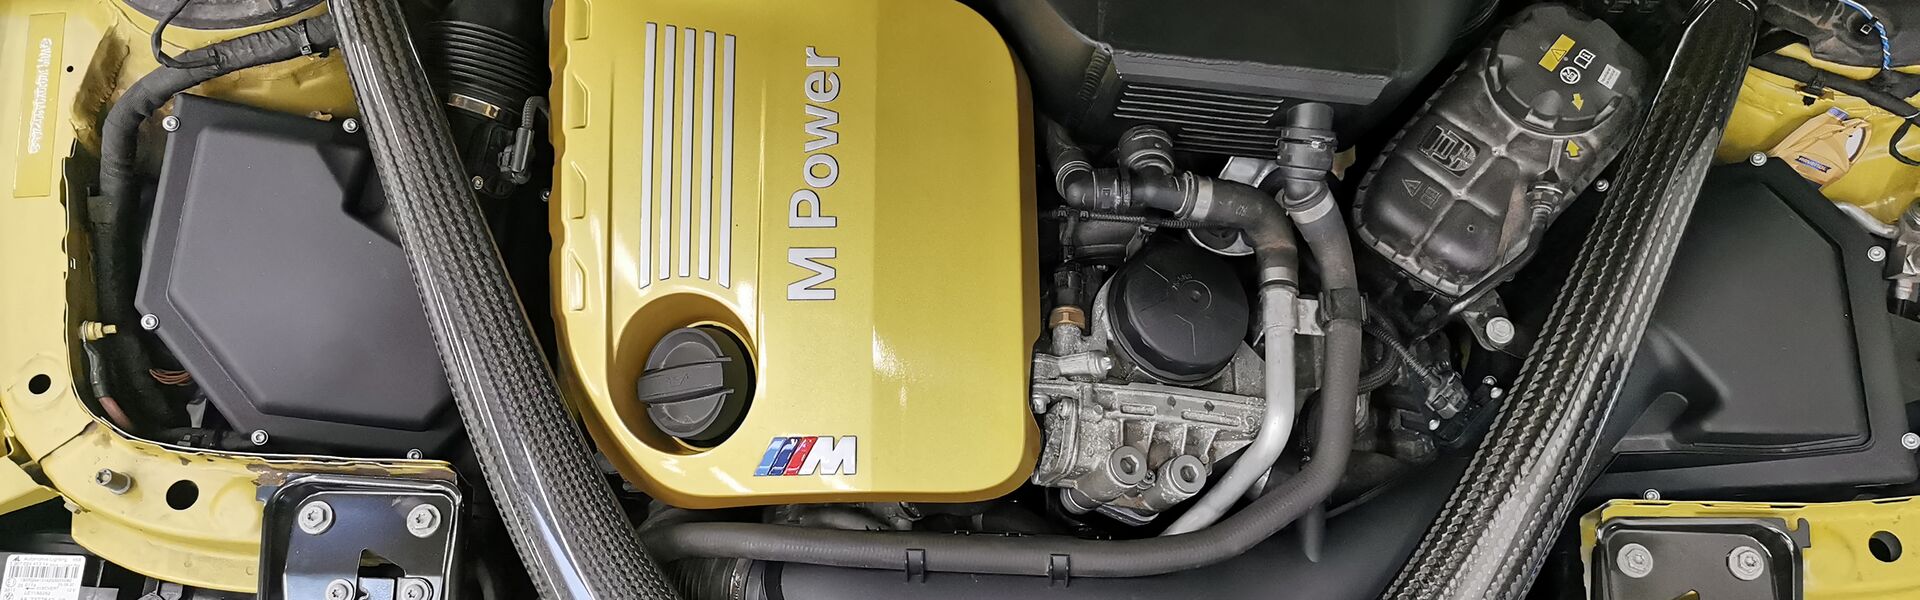 Engine BMW 435i F32